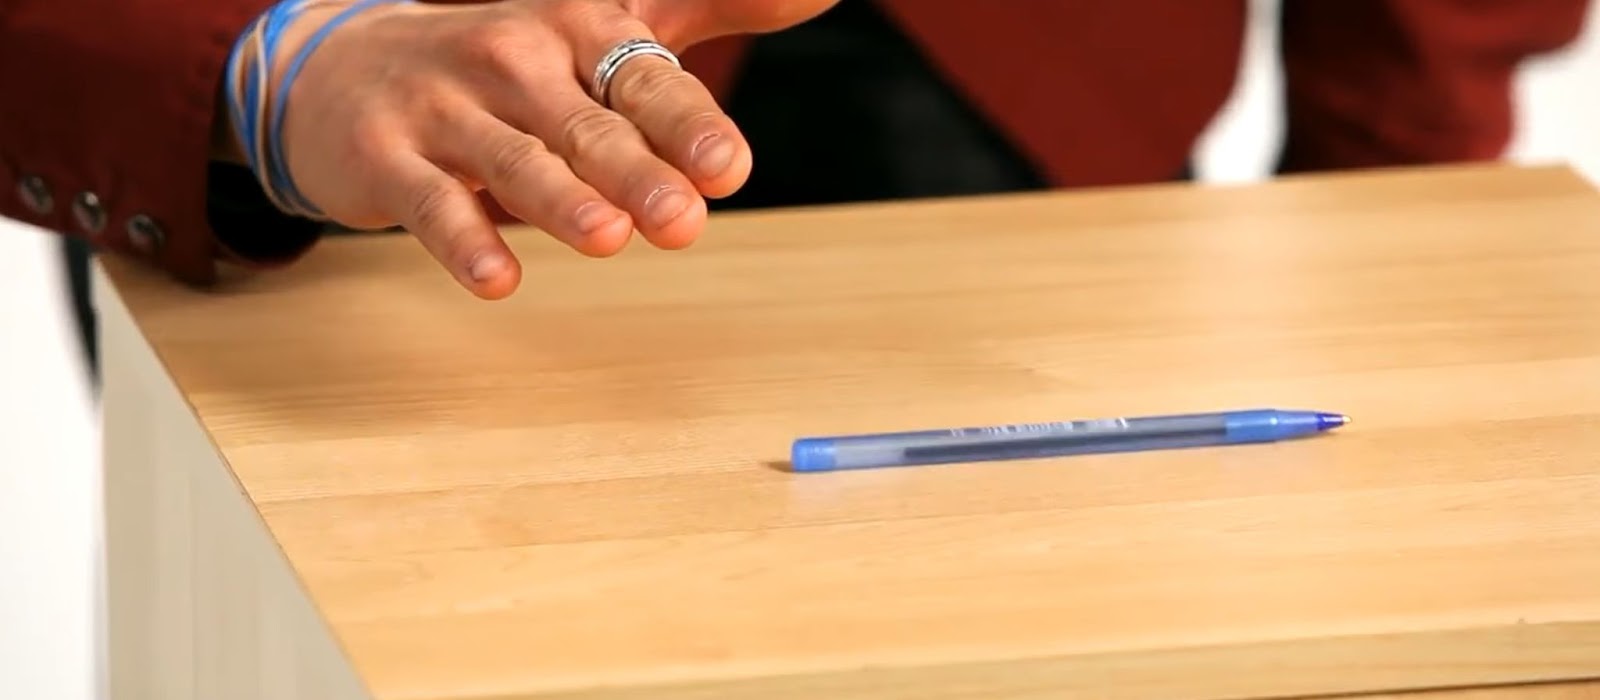 Moving pen magic trick 